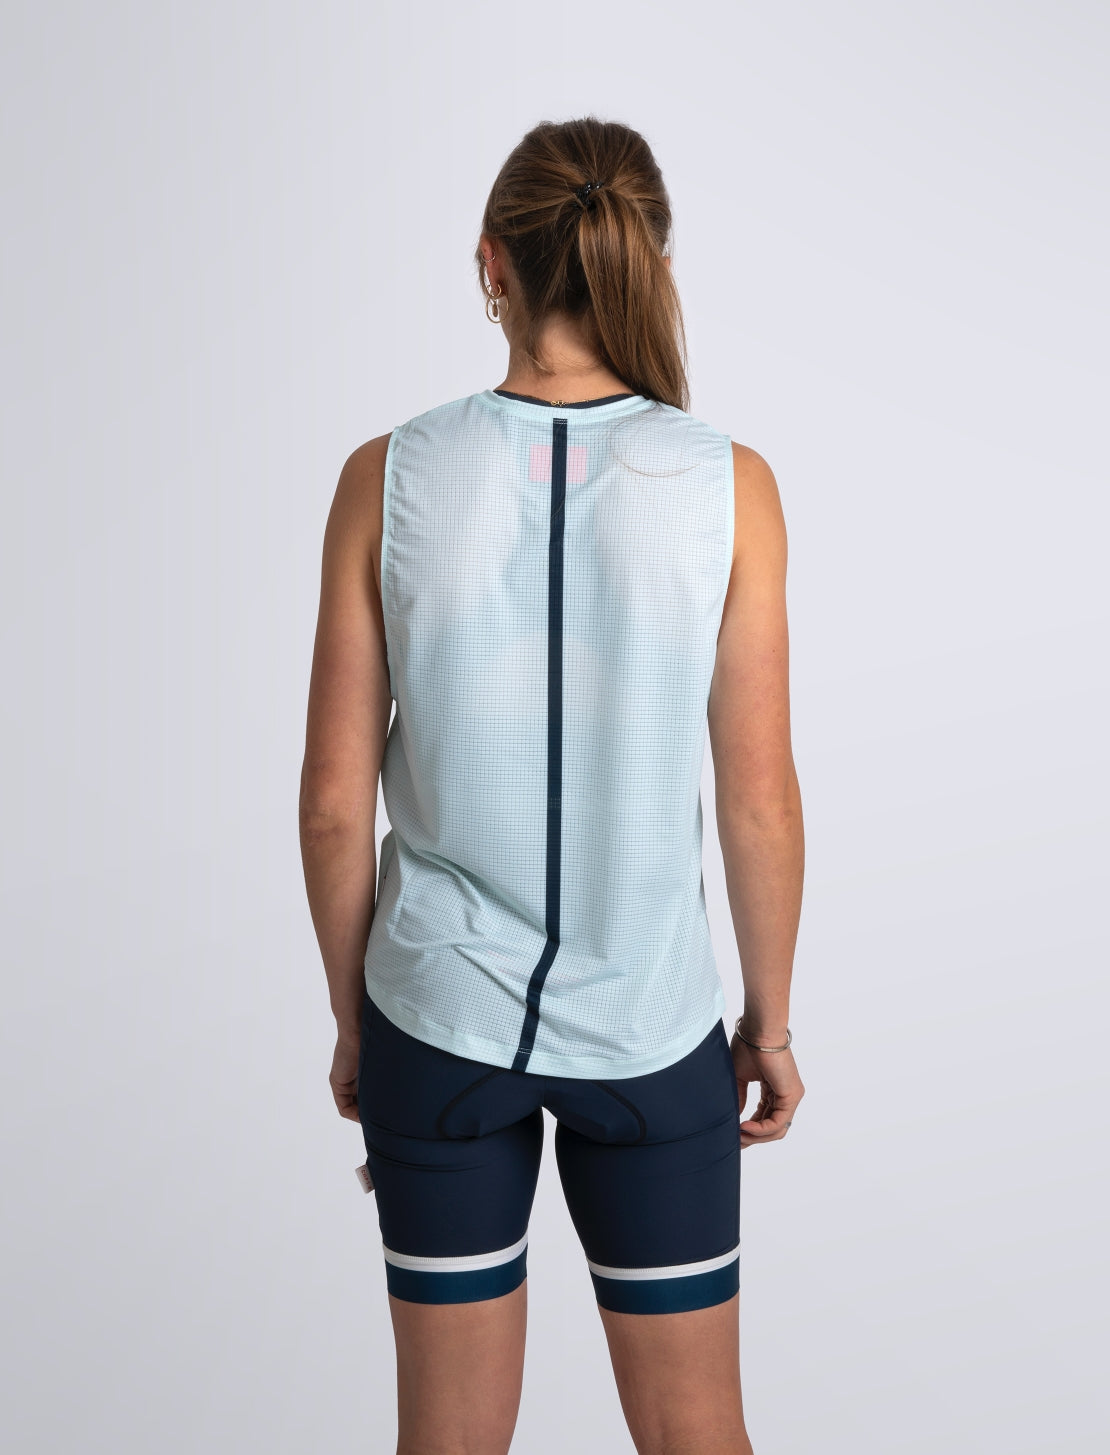 Women's sleeveless training top in Skylight Blue #color_skylight-blue